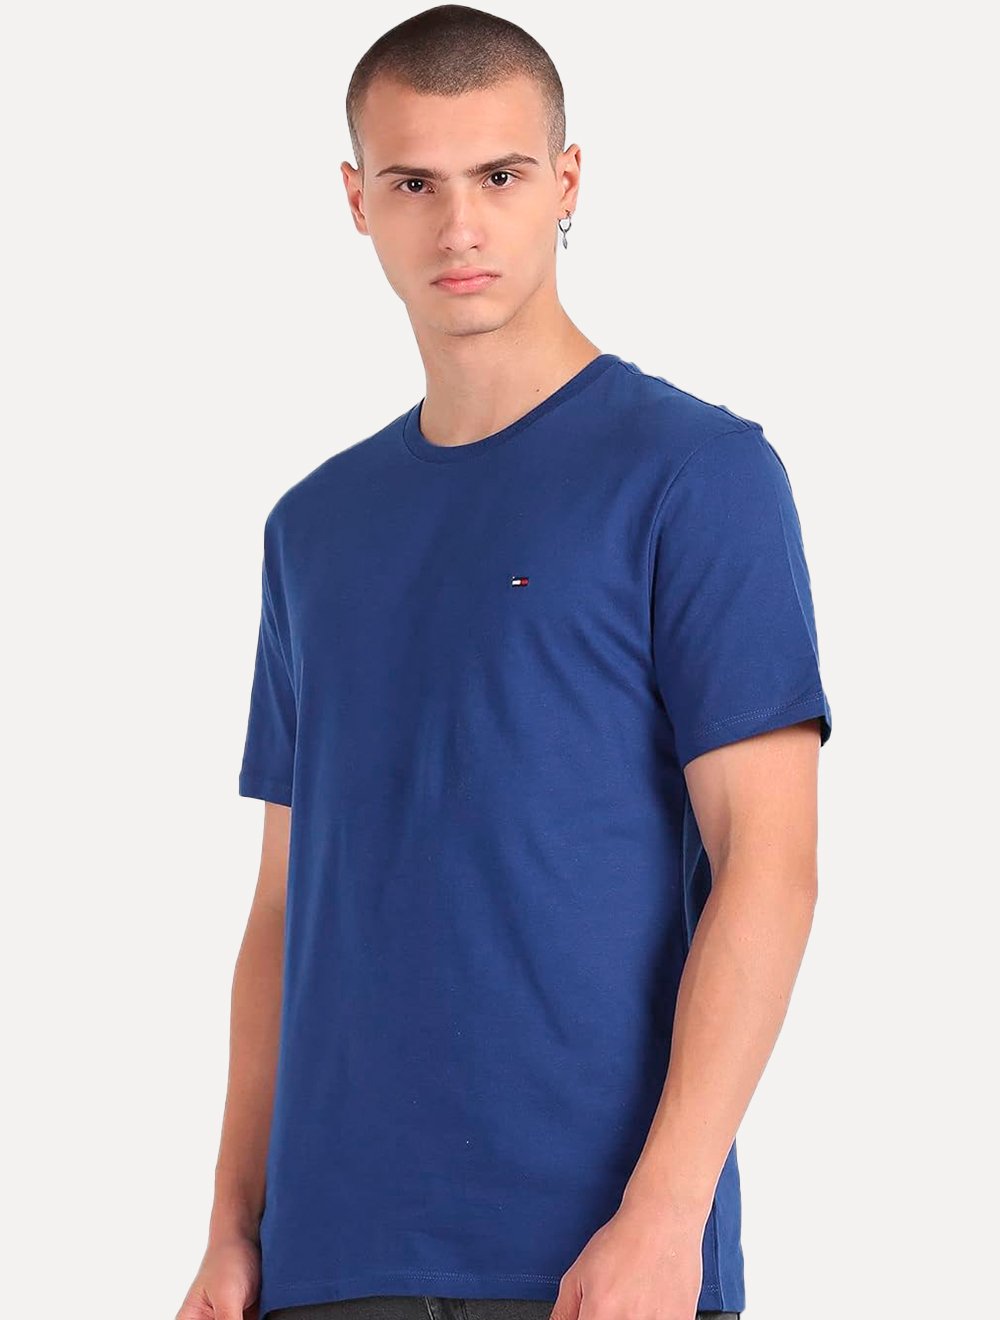 Camiseta Tommy Hilfiger Masculina Center Chest Graphic Azul - Compre Agora